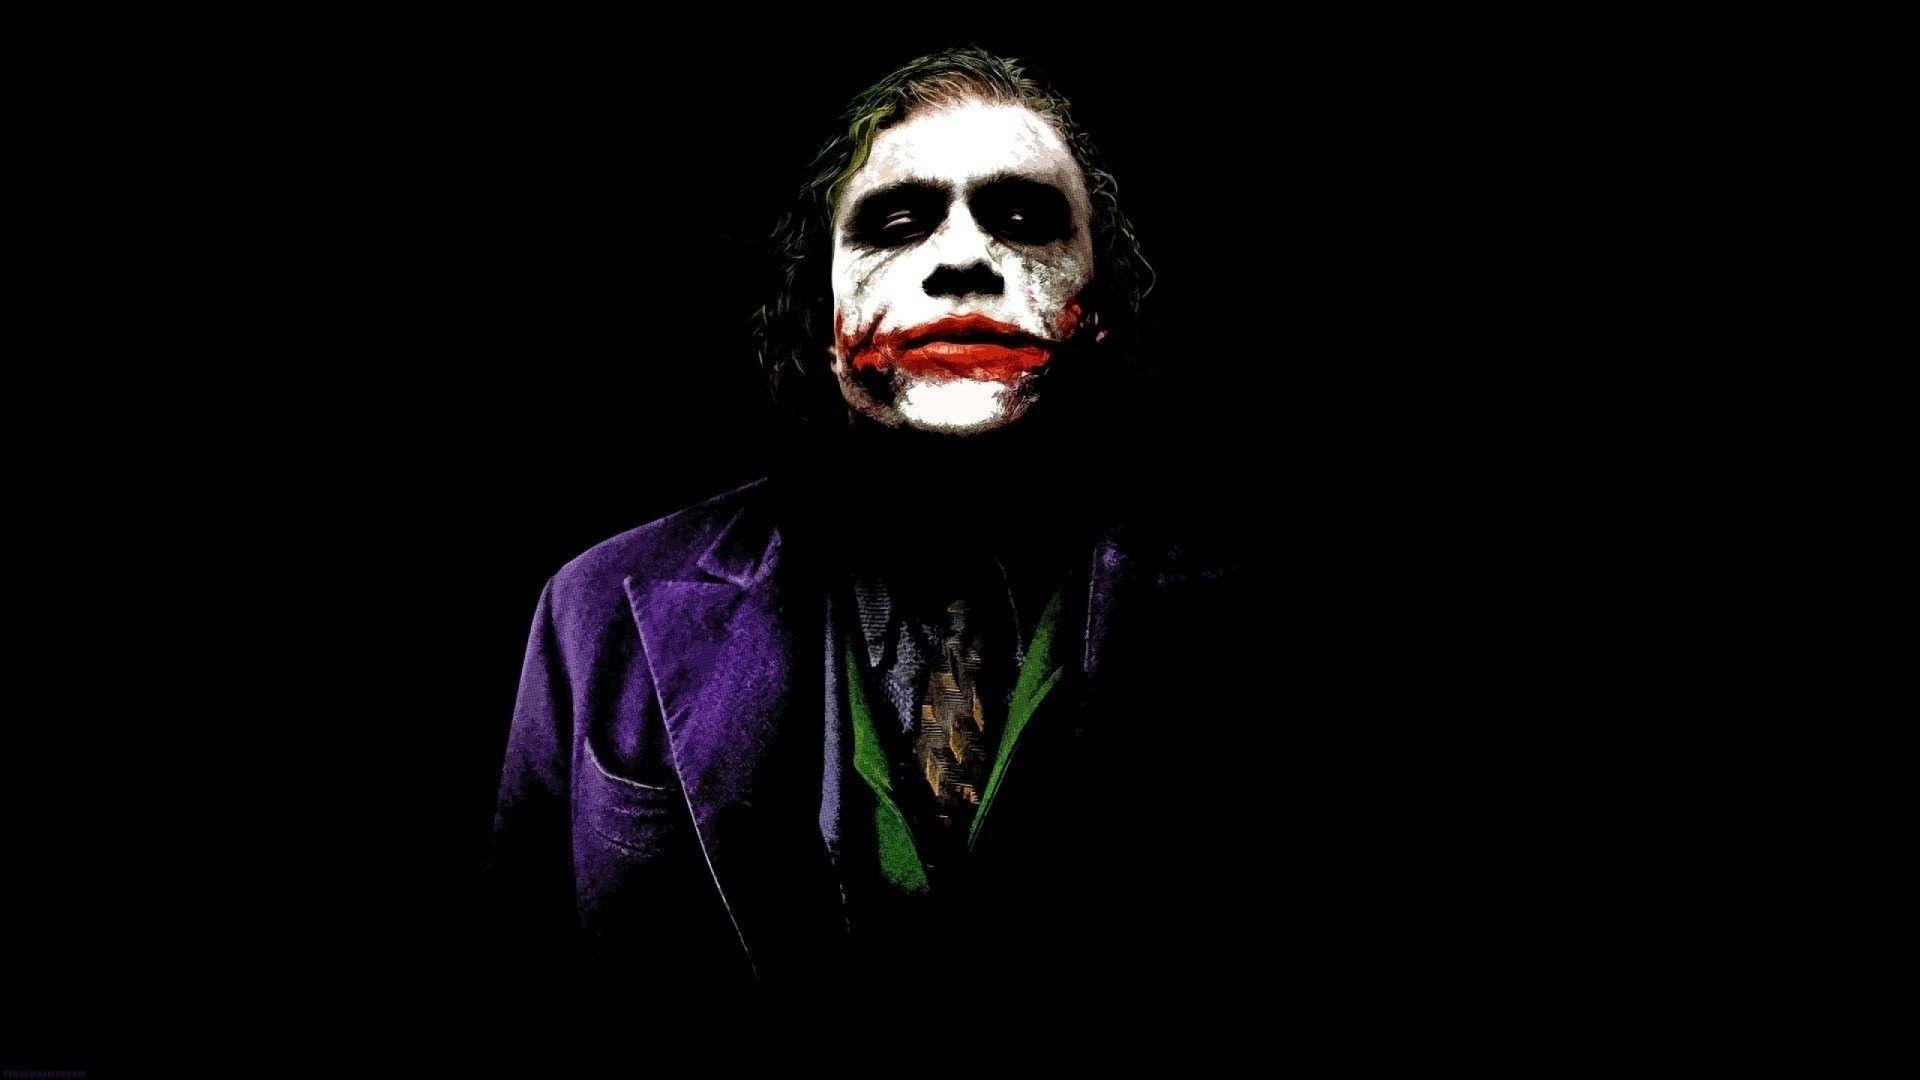 Joker Heath Ledger The Dark Knight 4K Wallpaper iPhone HD Phone #4010h